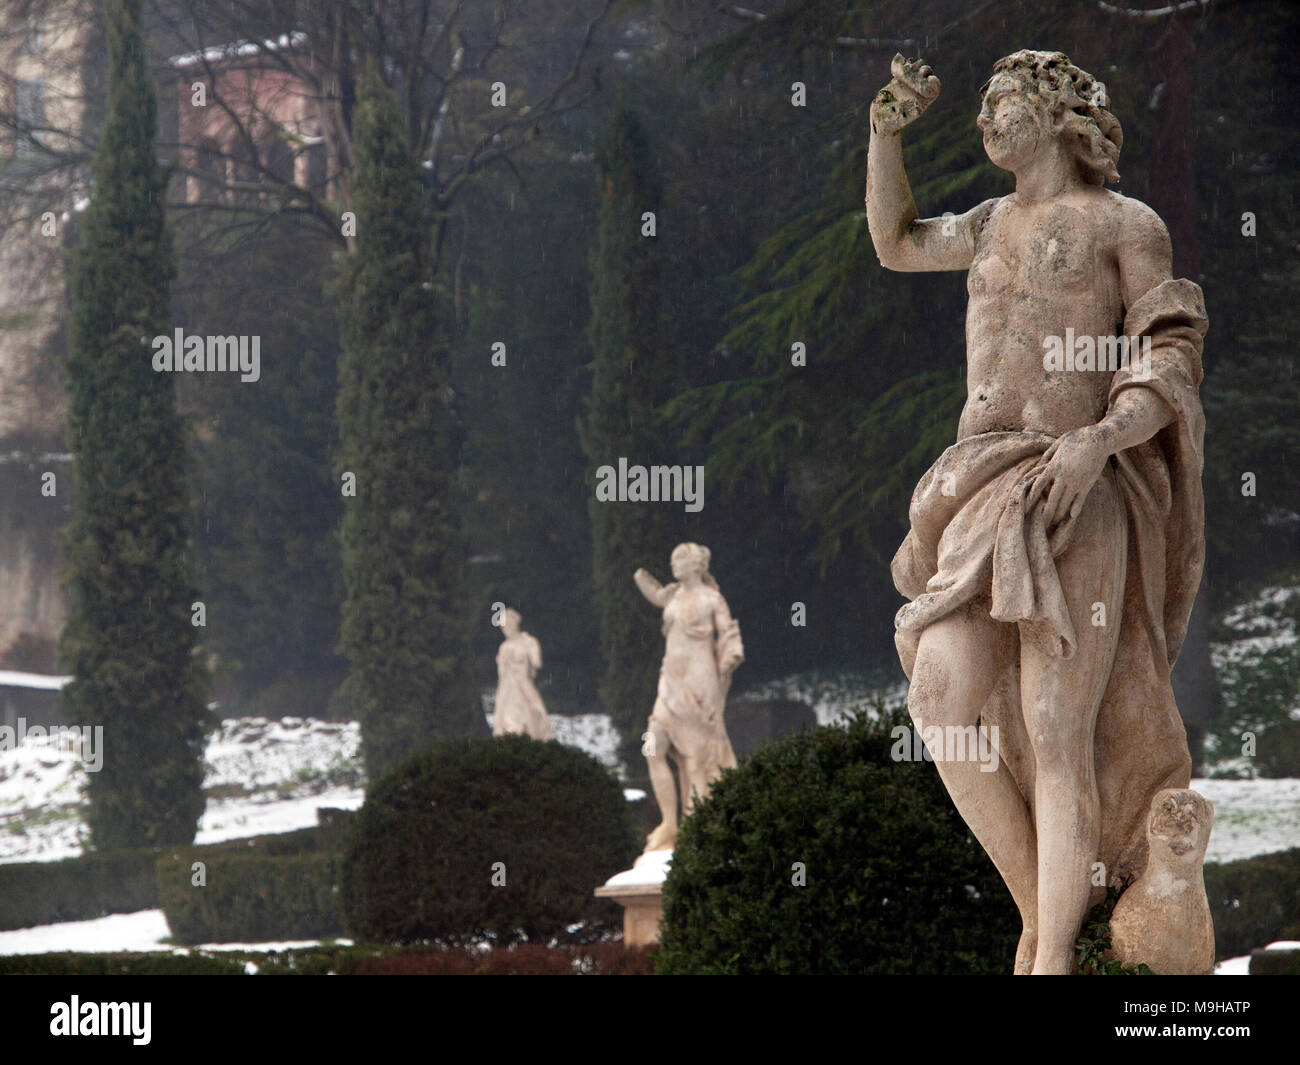 A winter's day in the gardens of the Palazzo Giardino Giusti, Verona Stock Photo